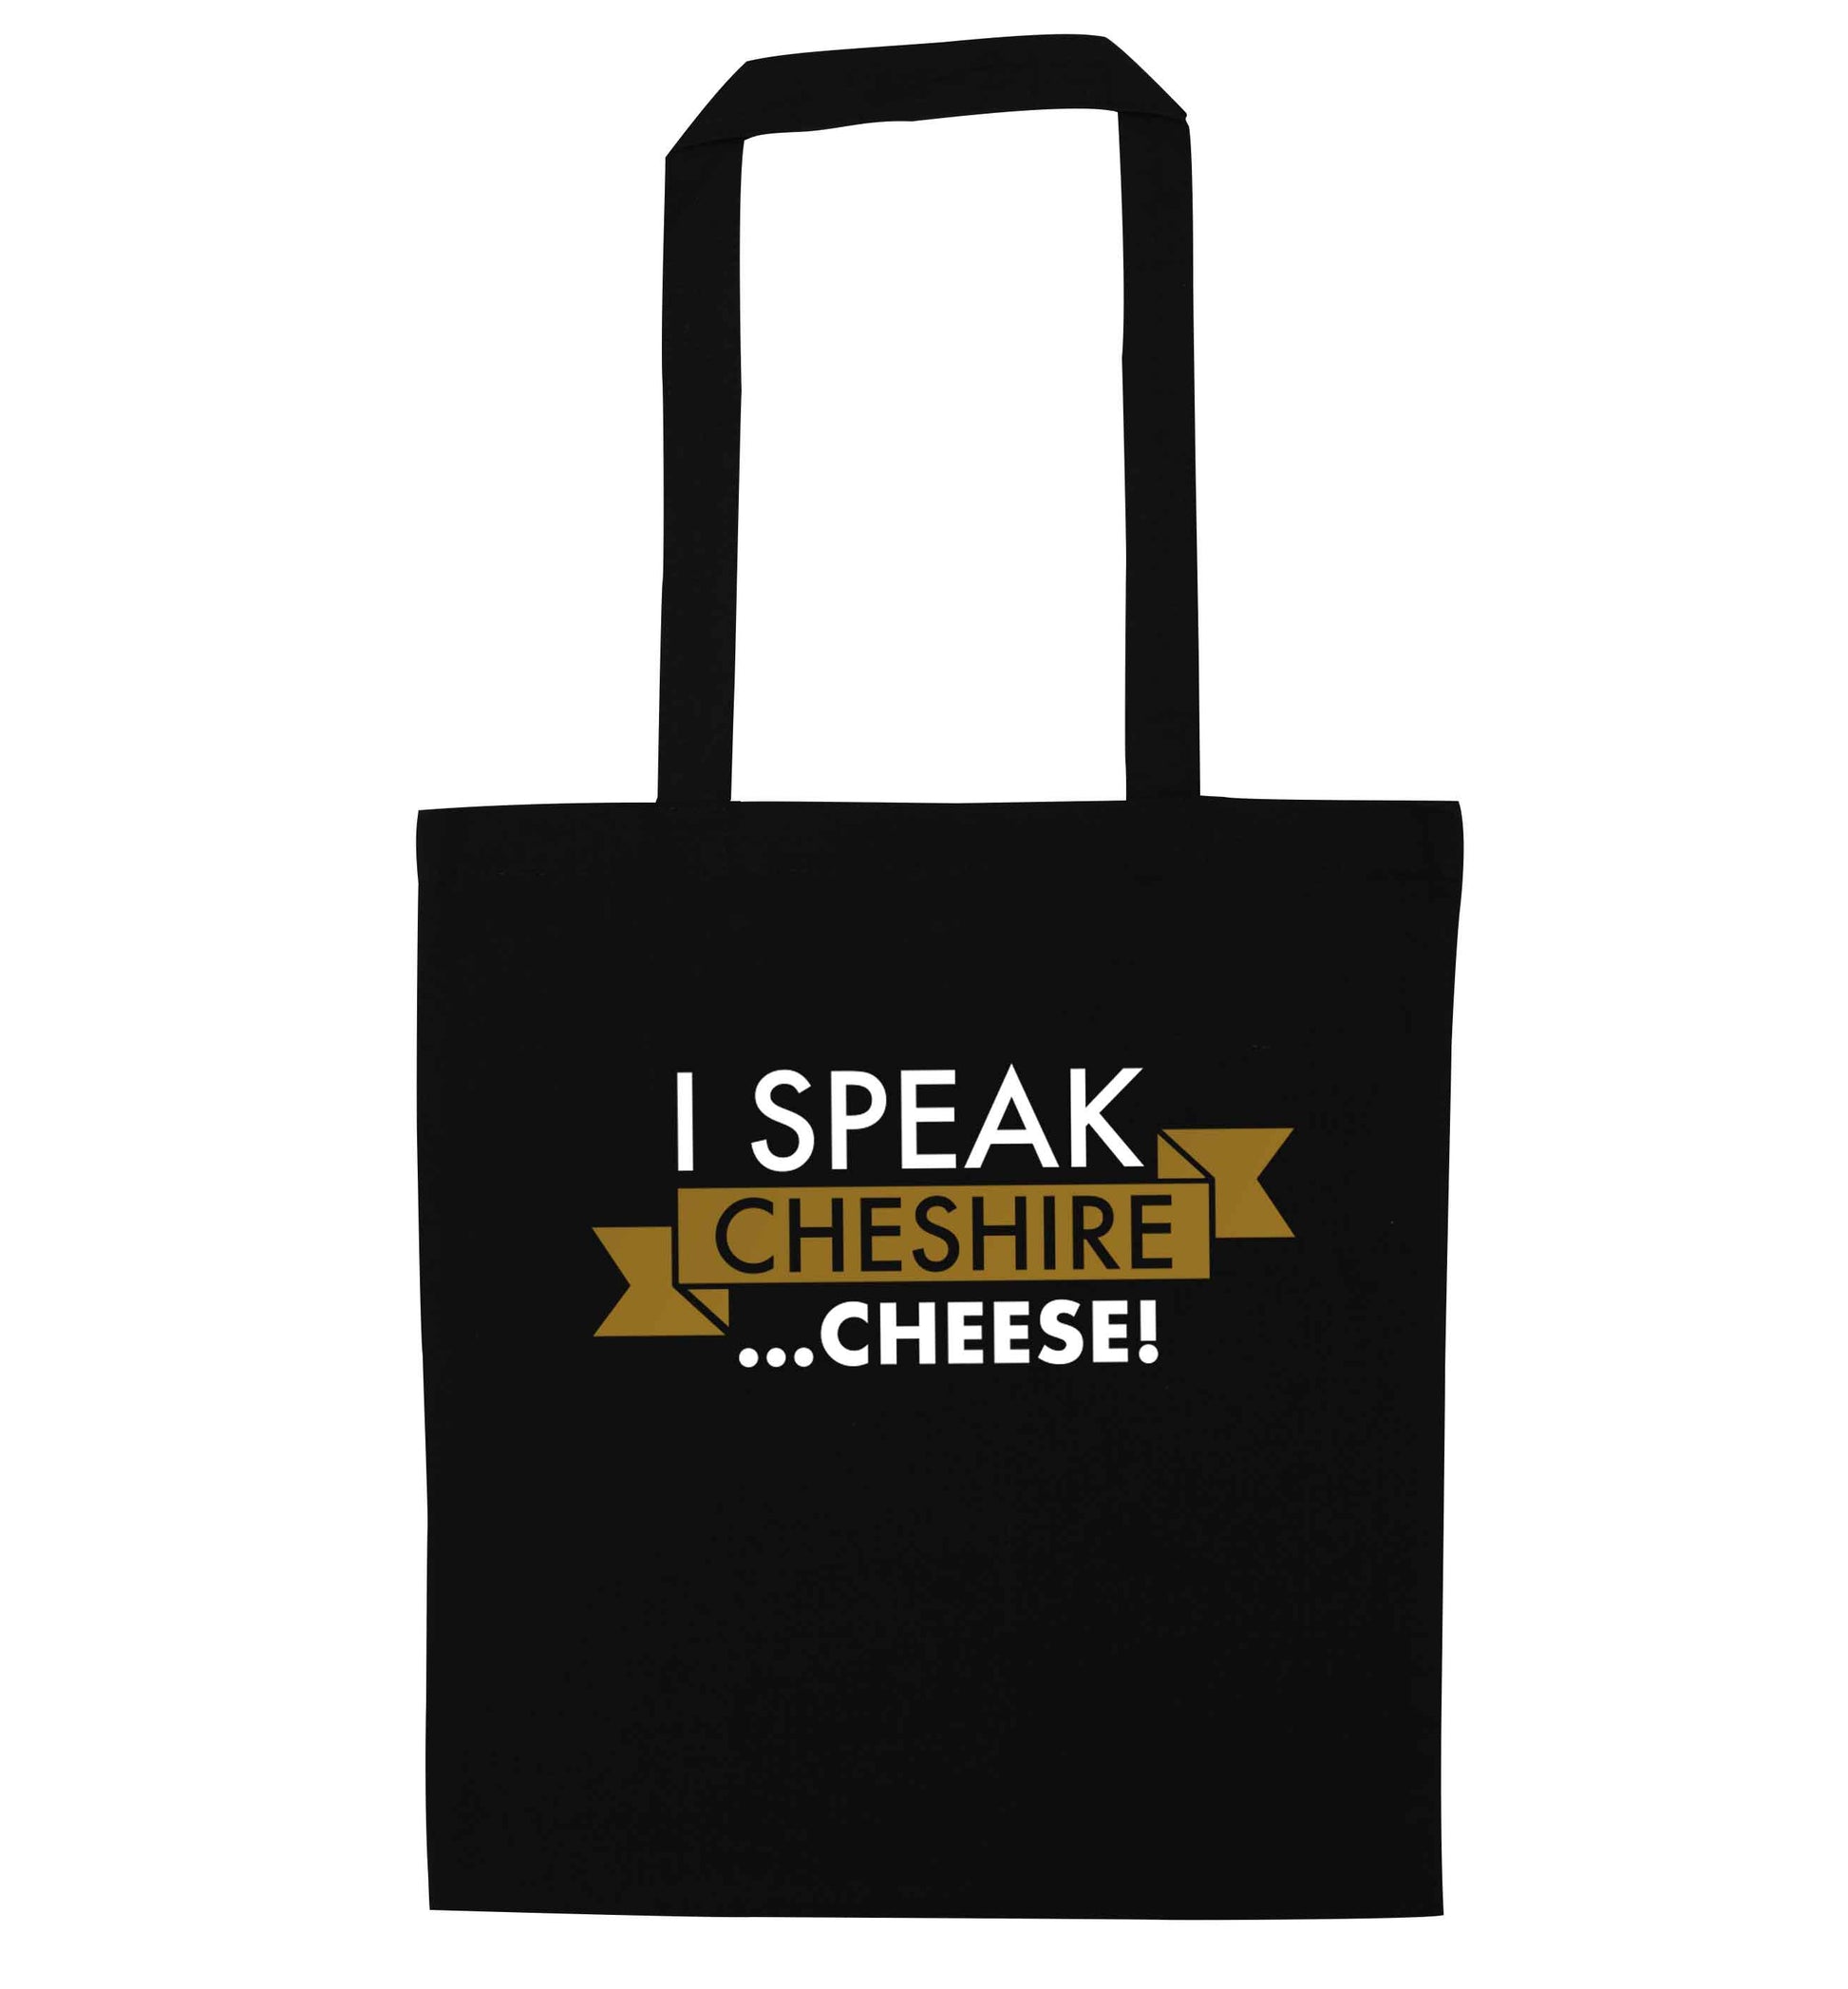 I speak Cheshire cheese black tote bag